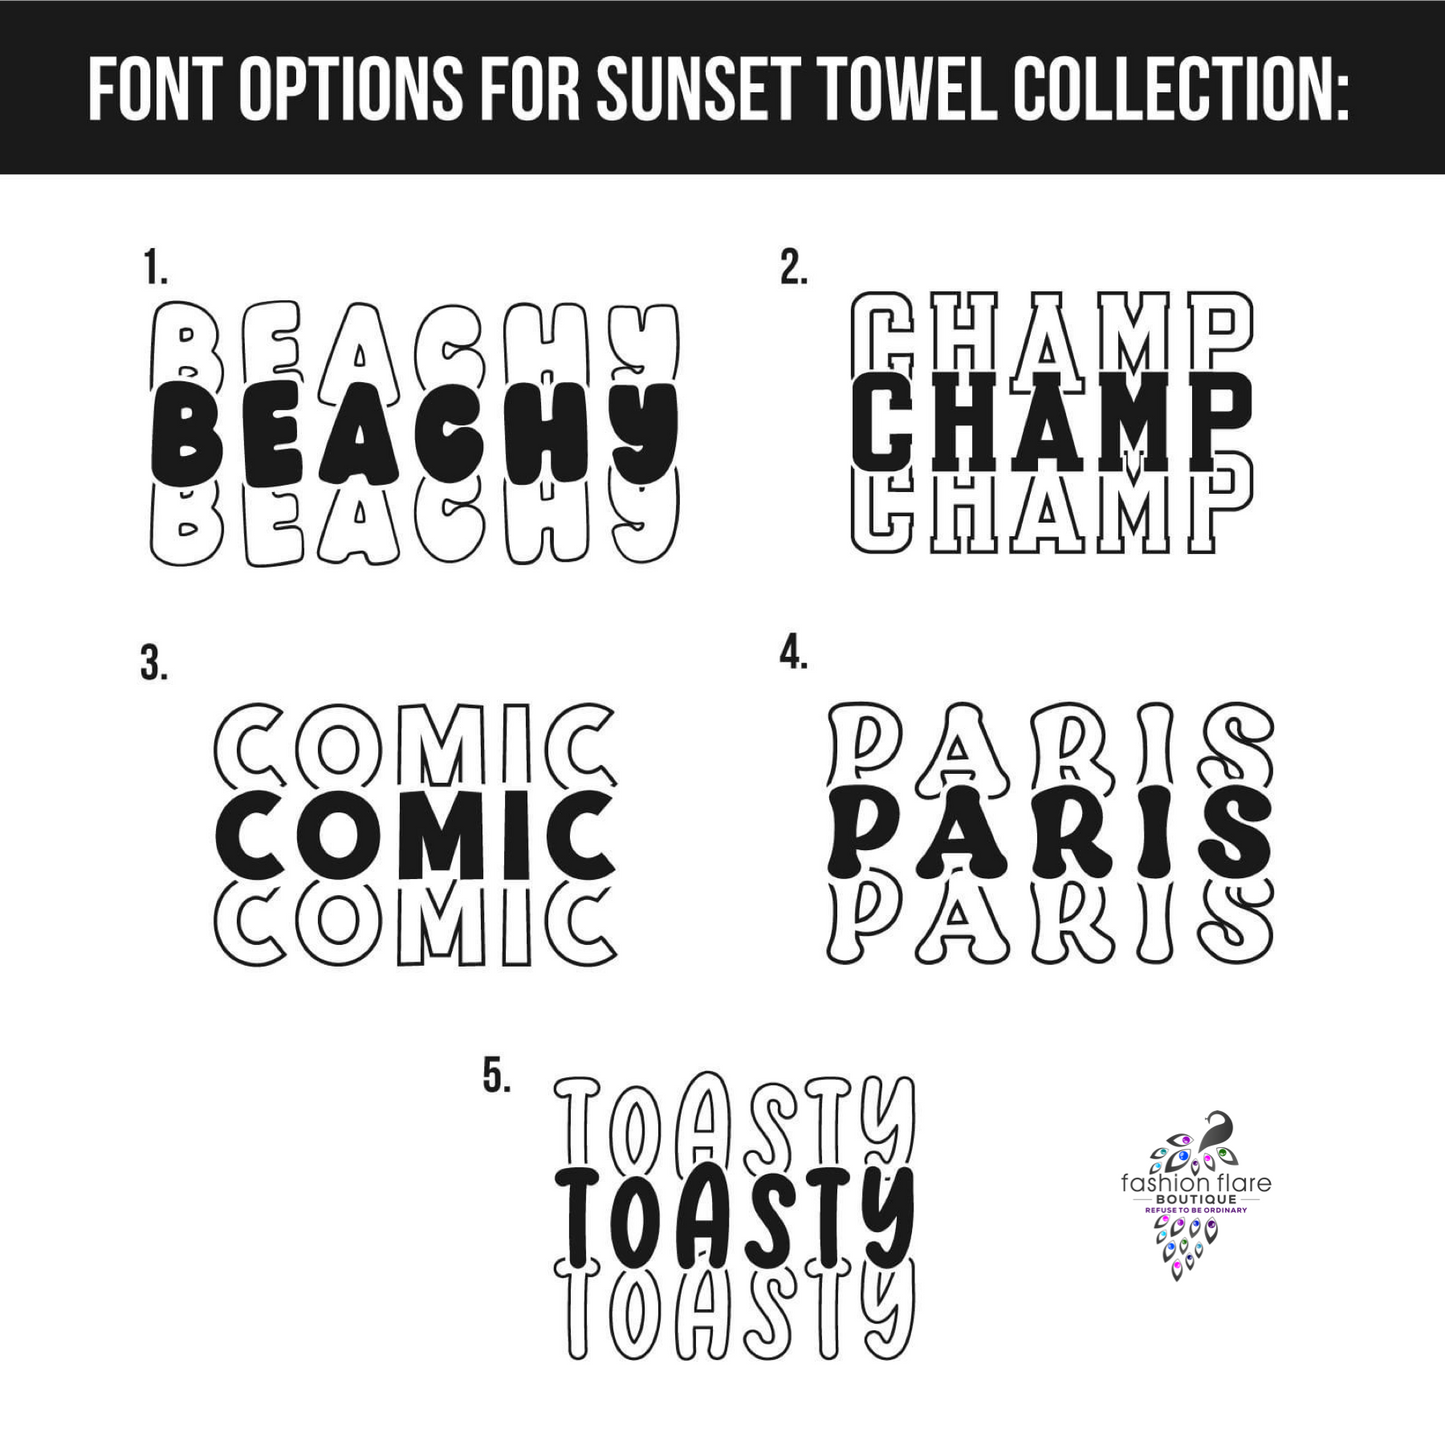 Custom Personalized Summer Sunset Towel - Rainbow Sunset Premium Microfiber Towel // 2 sizes